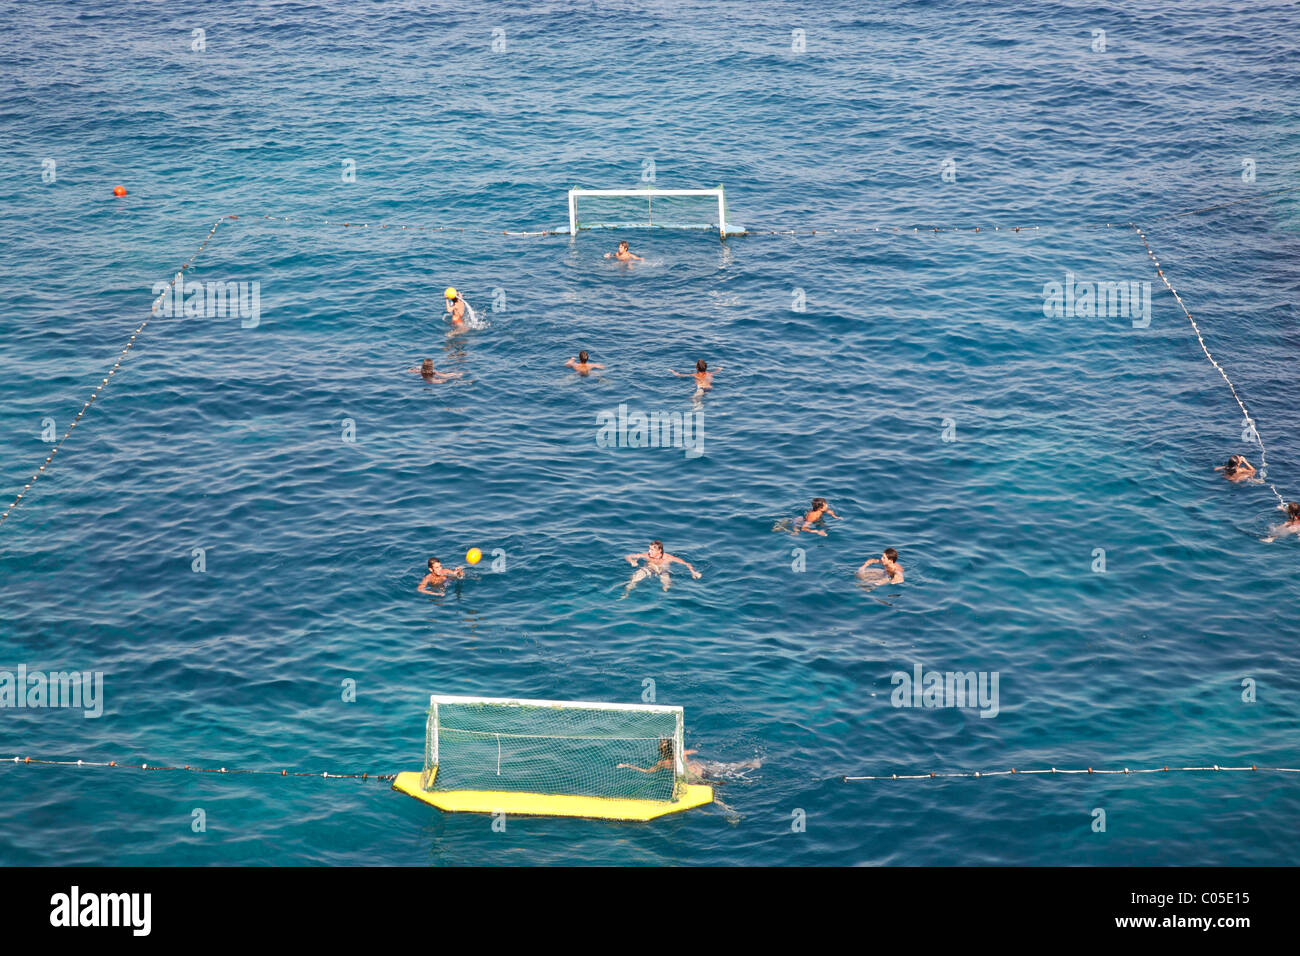 Water polo in the sea, Aci Castello, Sicily, Italy Stock Photo